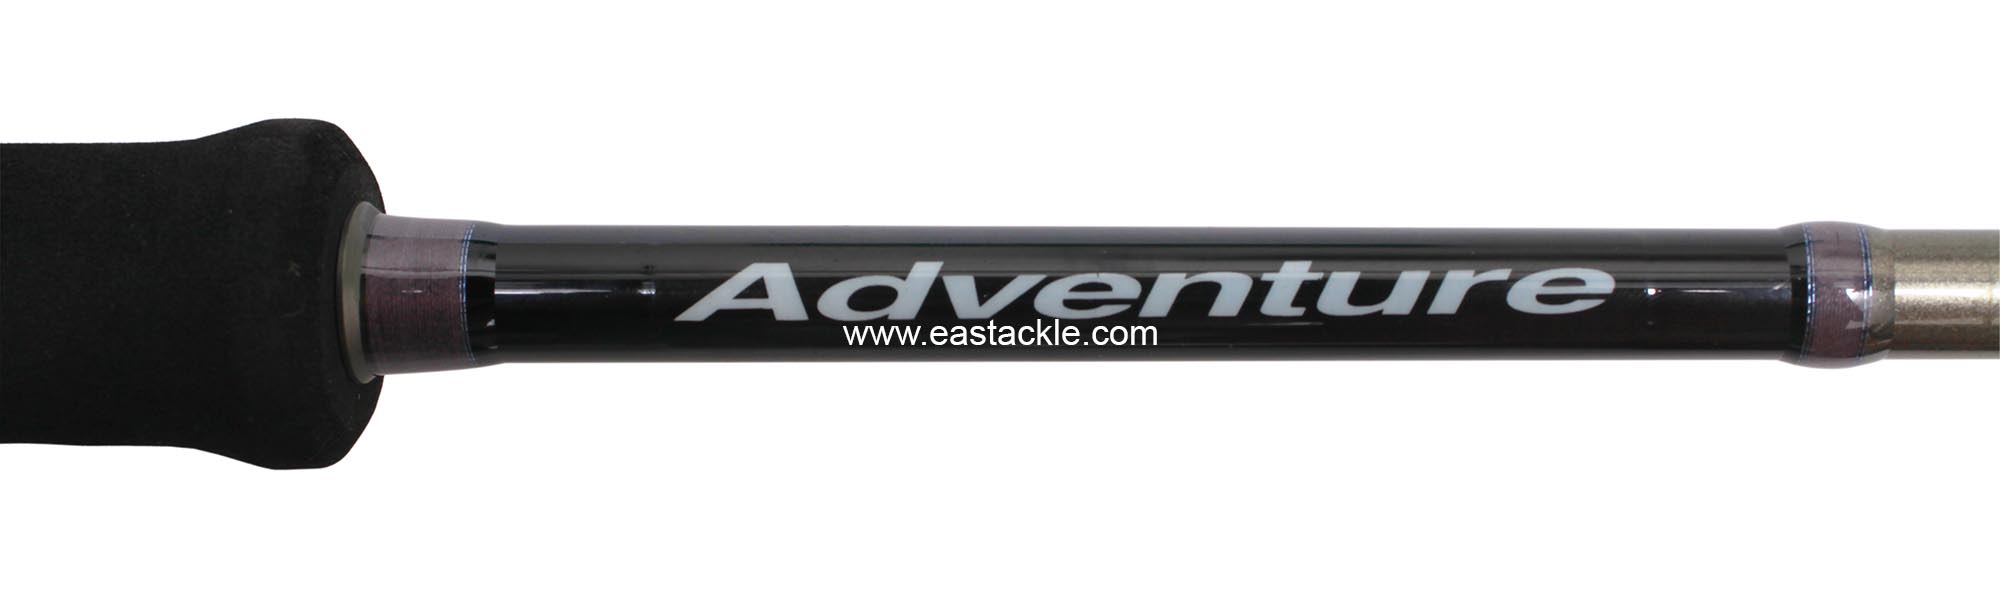 Storm - Adenture - Bait Casting Rod Series - Logo | Eastackle